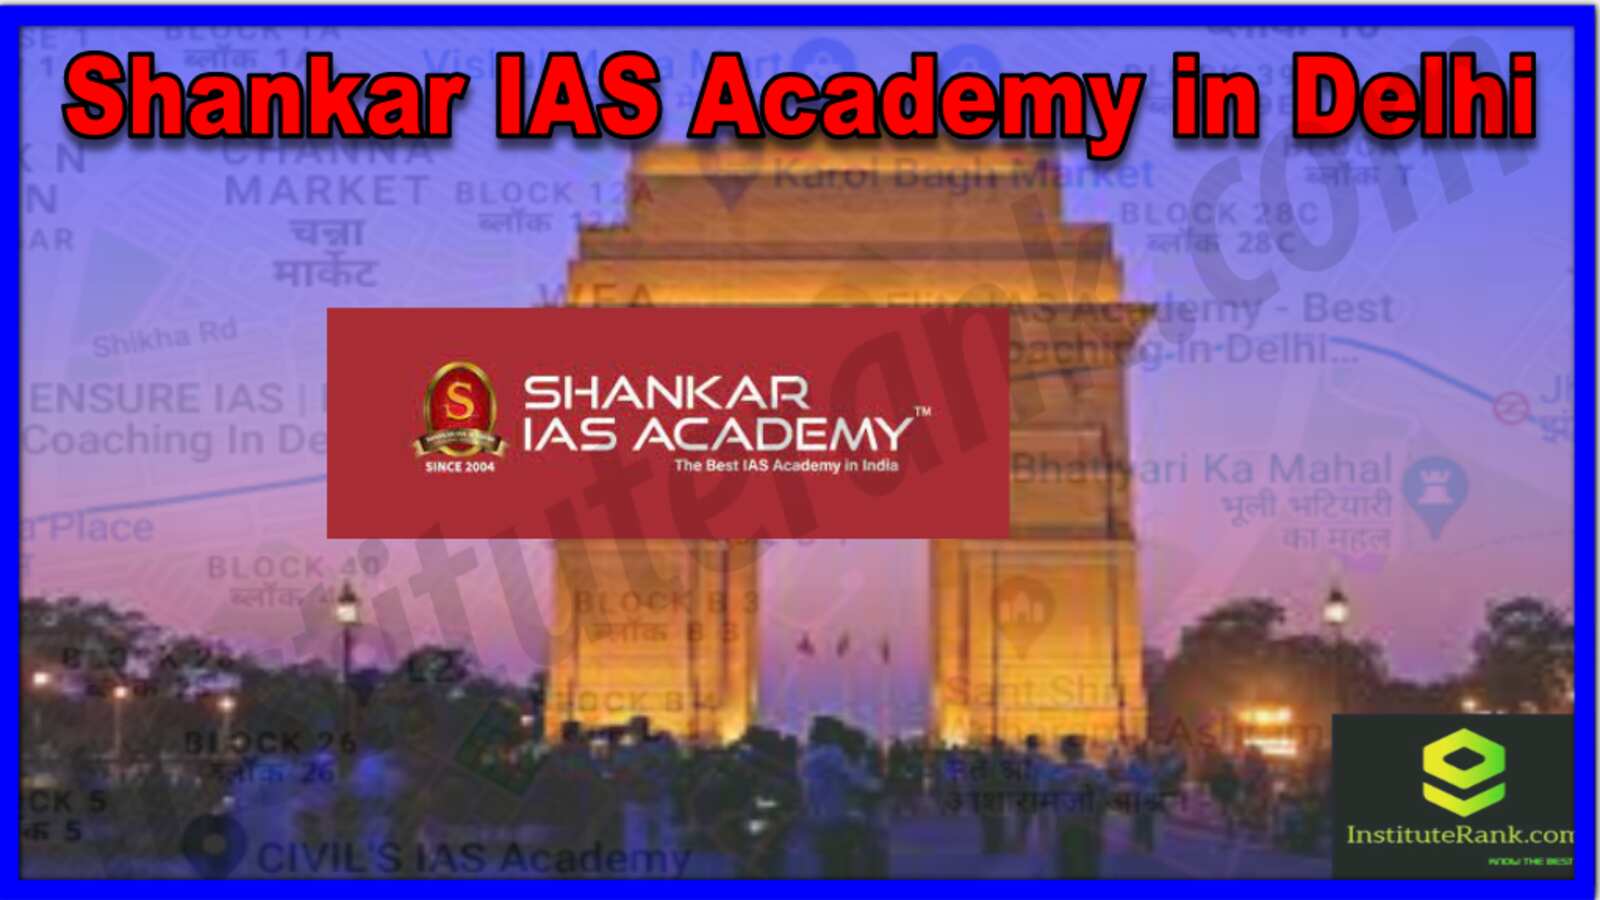 Shankar IAS Academy in Delhi